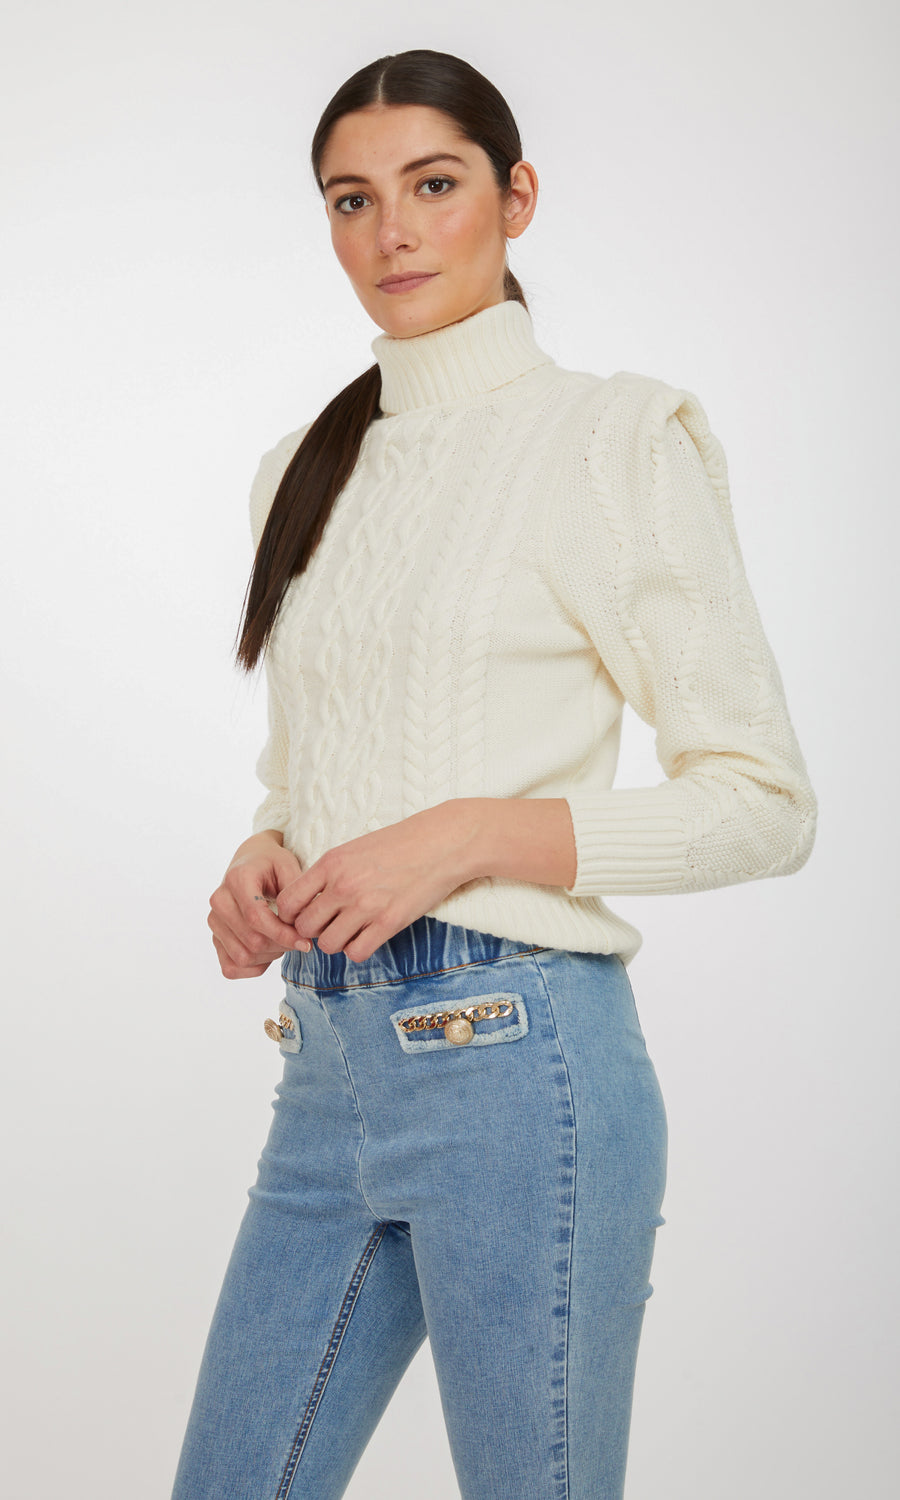 Jordan Cable Knit Sweater - Cream